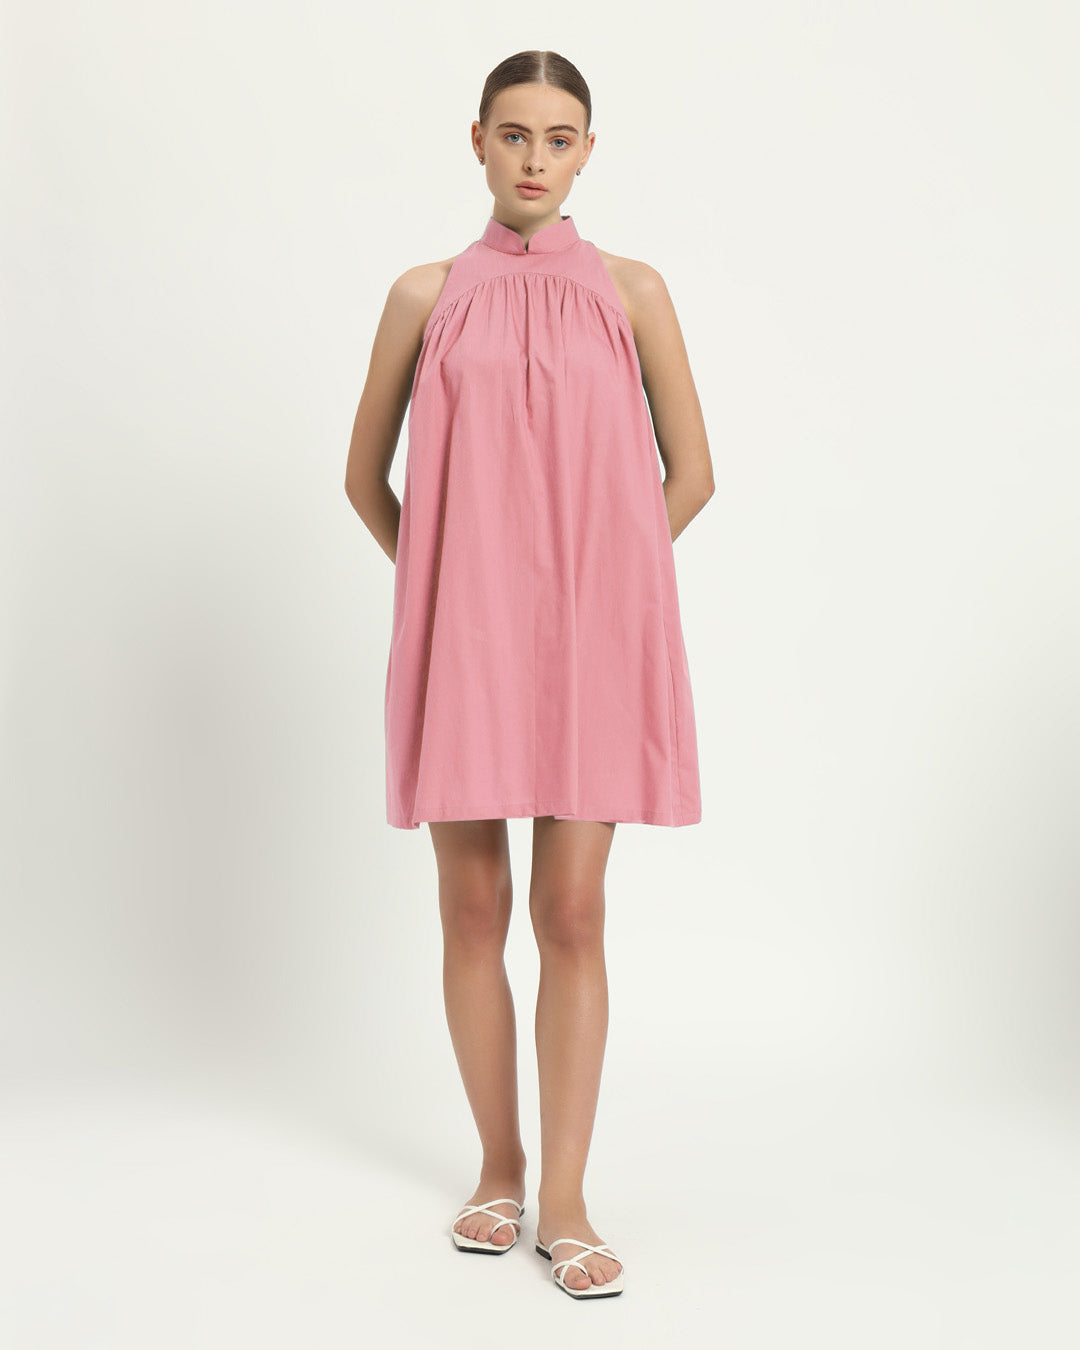 The Eruft Fondant Pink Cotton Dress